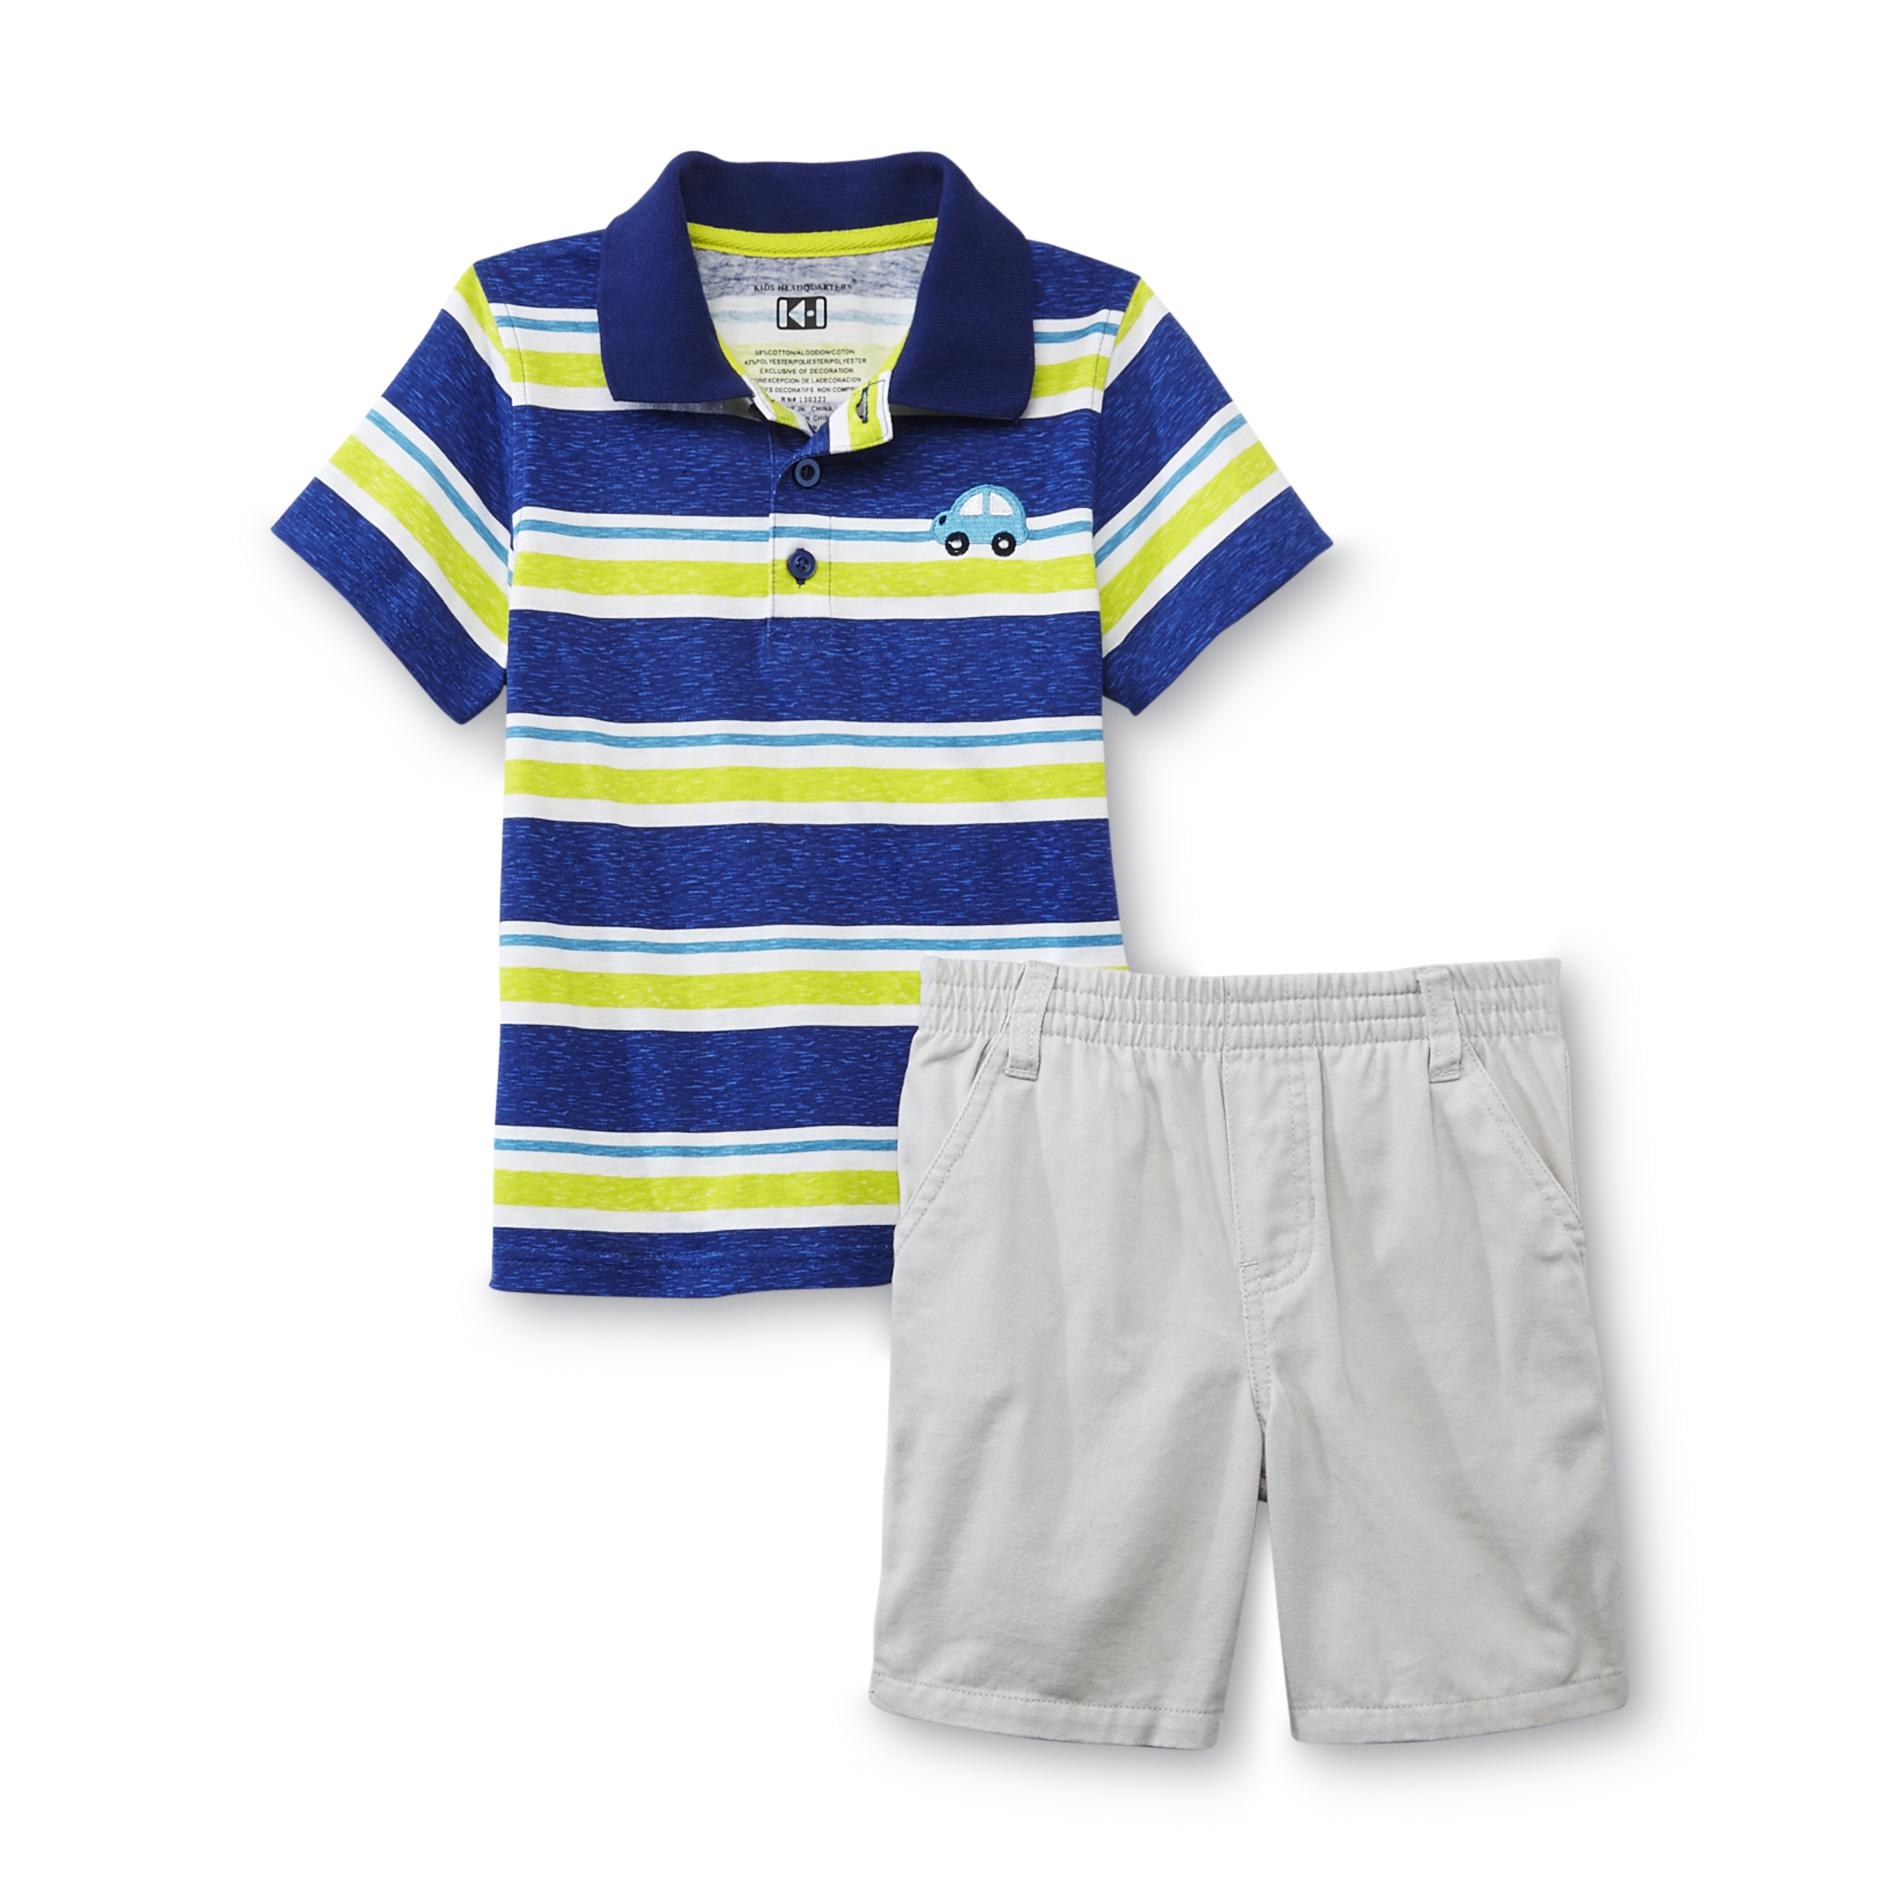 Kids Headquarters Toddler Boy's Polo Shirt & Shorts - Striped